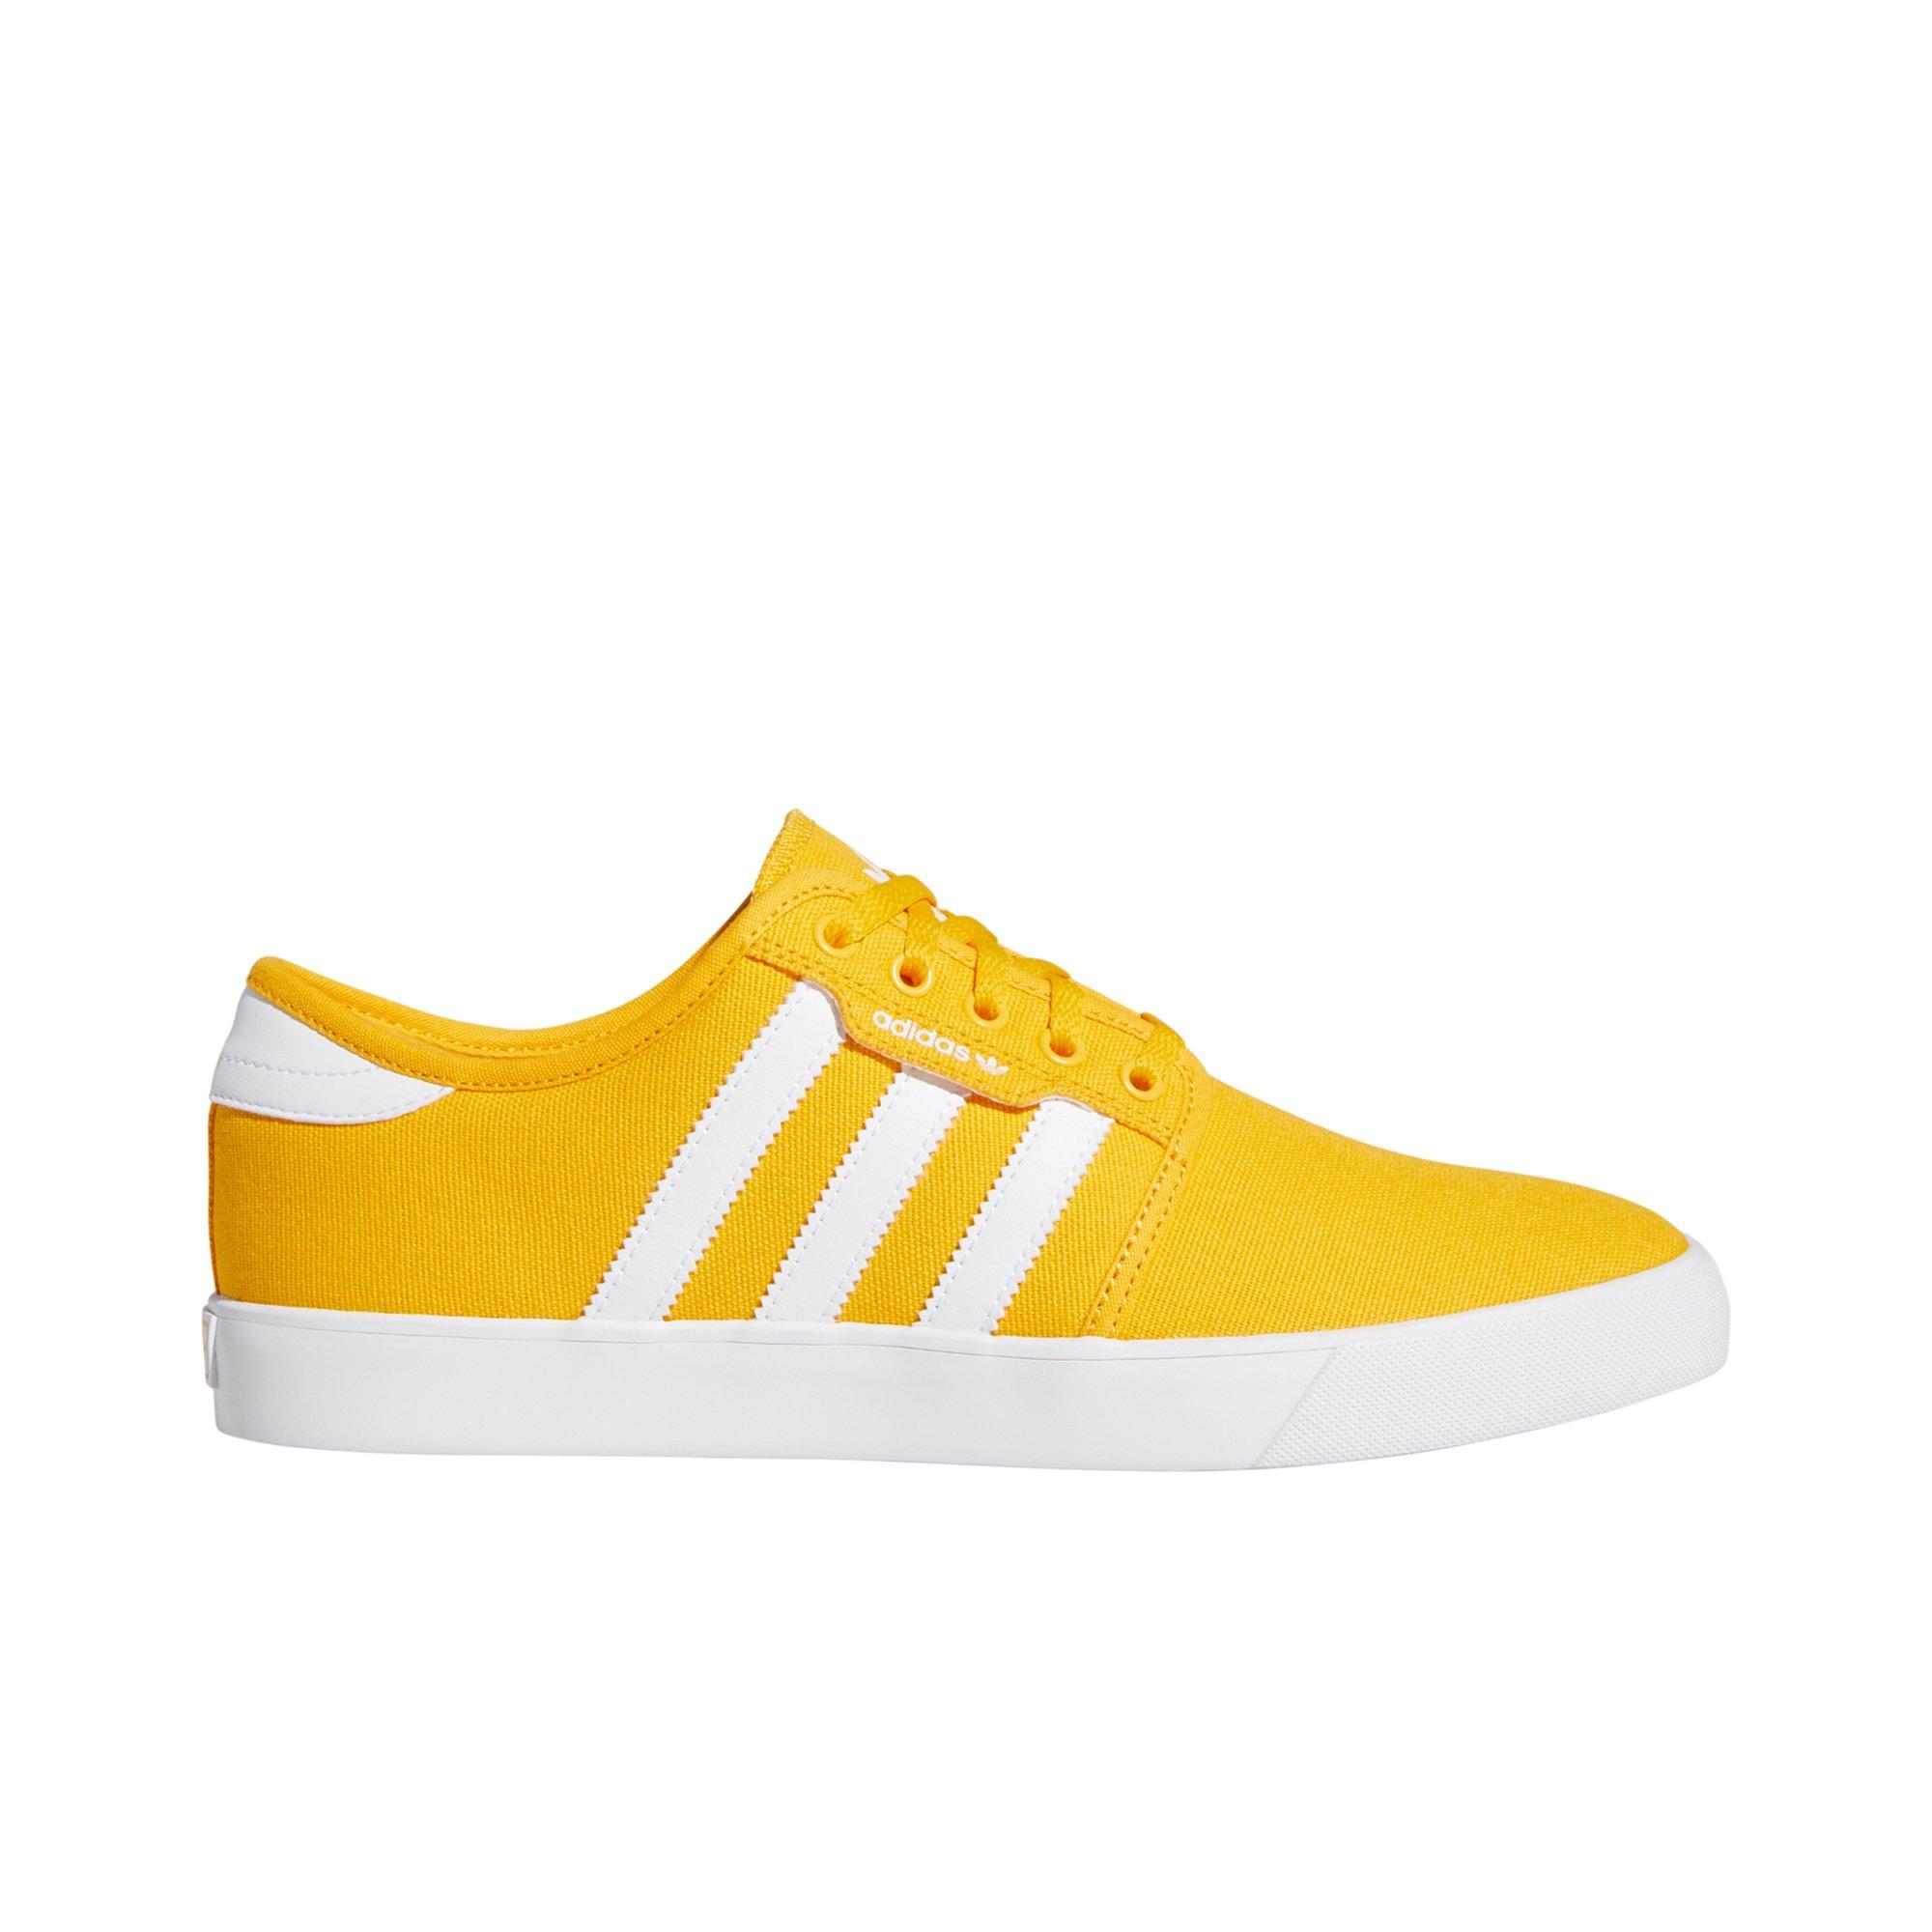 yellow and white adidas